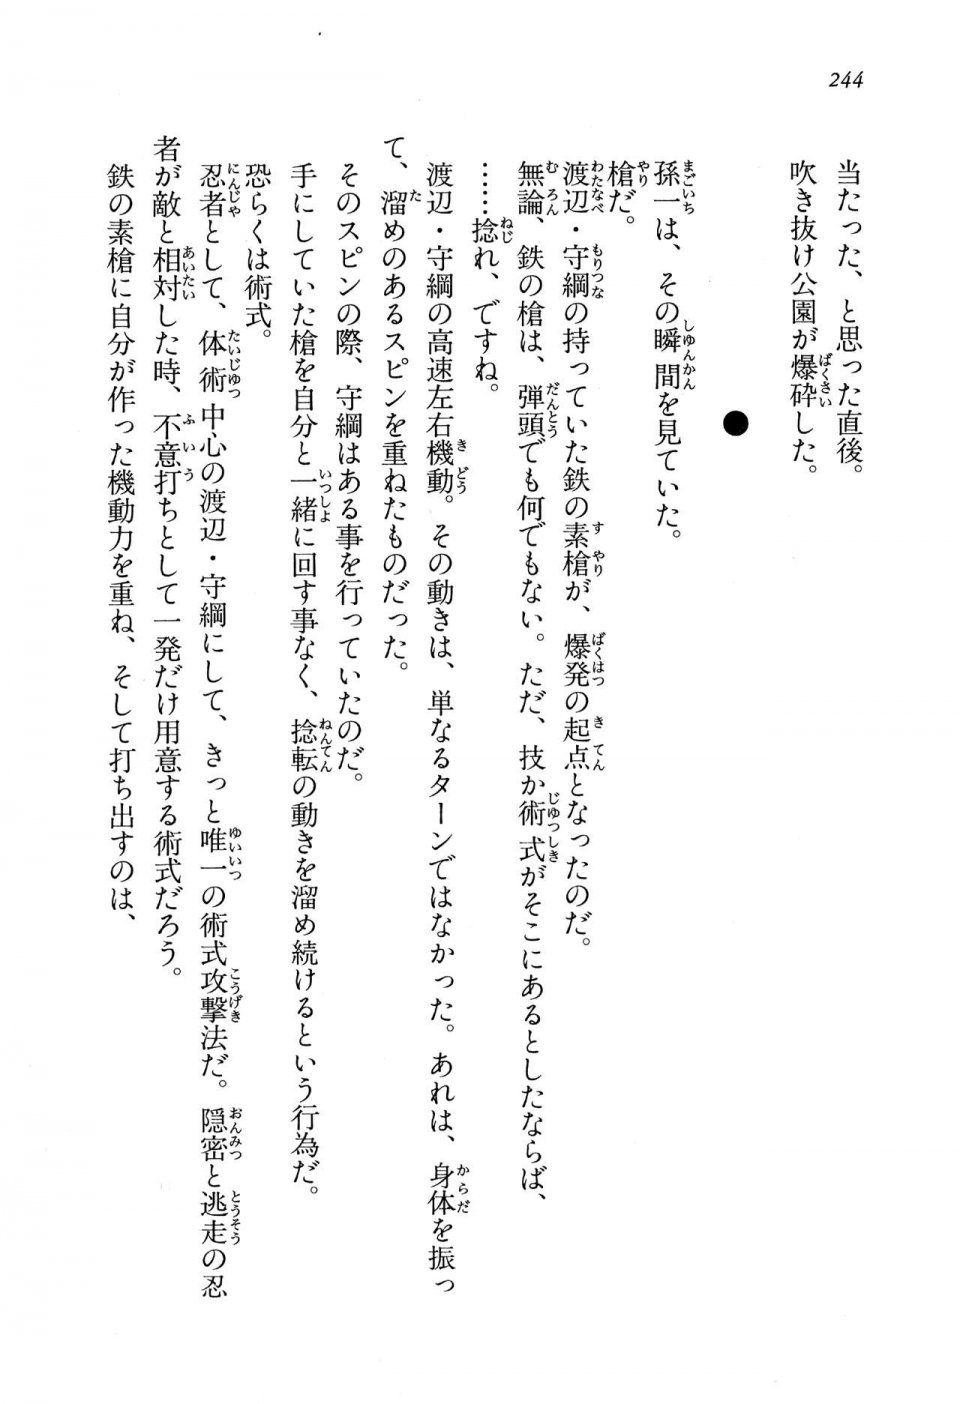 Kyoukai Senjou no Horizon BD Special Mininovel Vol 8(4B) - Photo #248